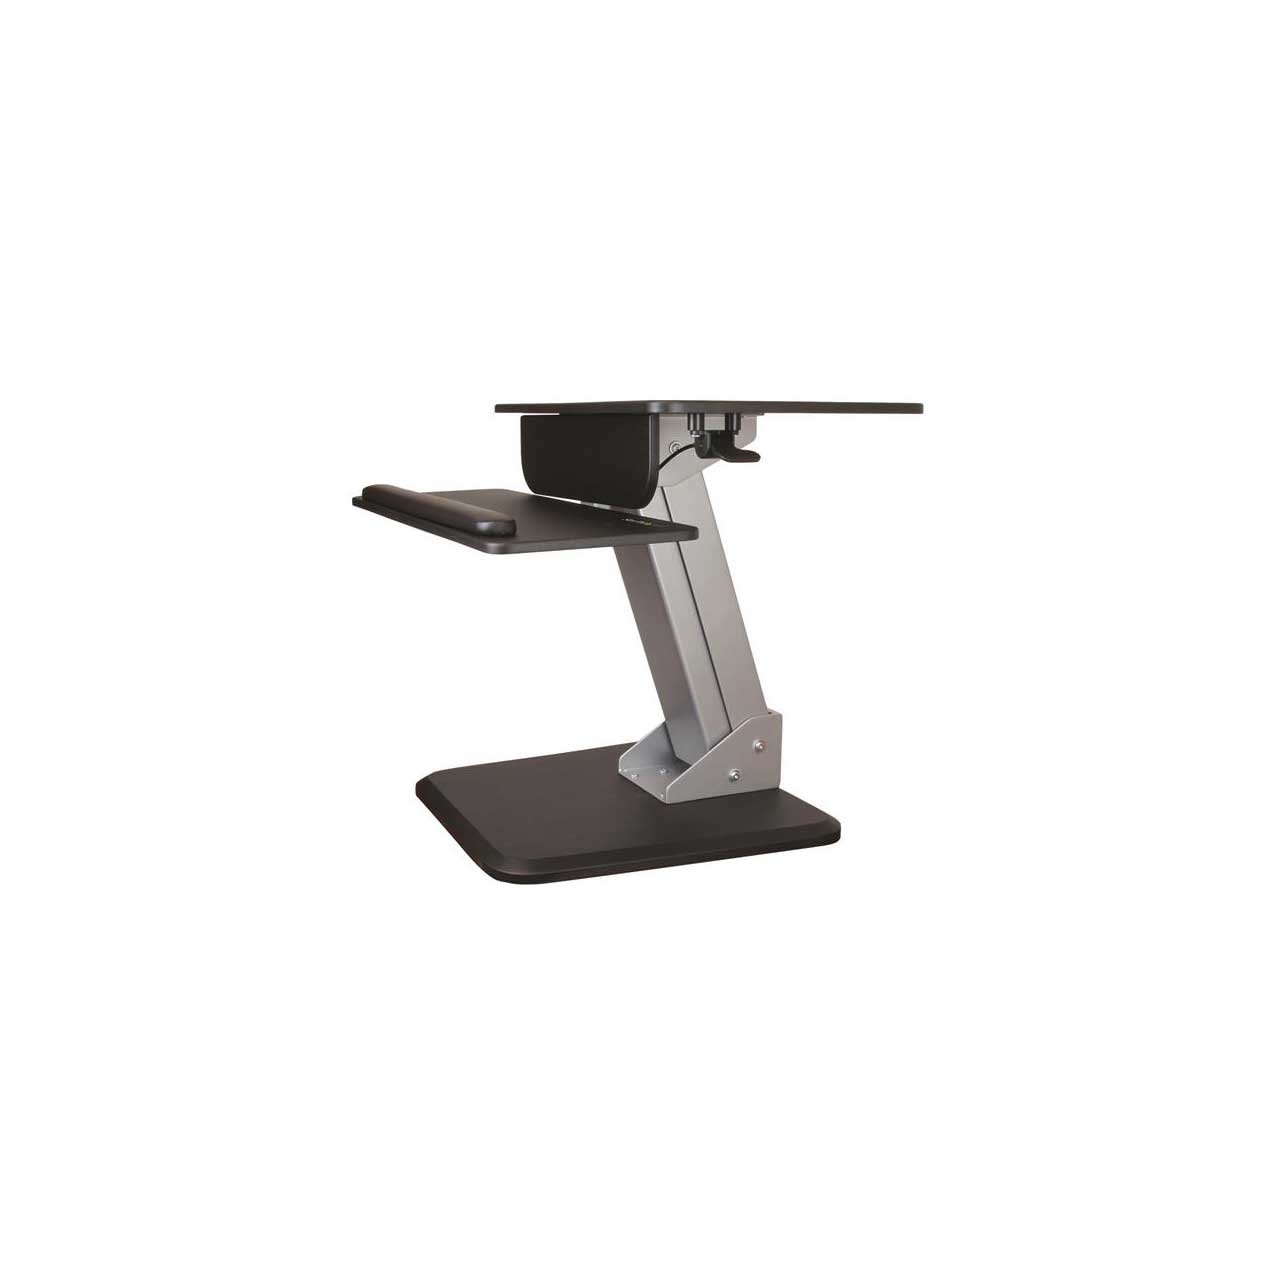 StarTech.com Ergonomic Anti-Fatigue Mat for Standing Desks - 20in x 30in